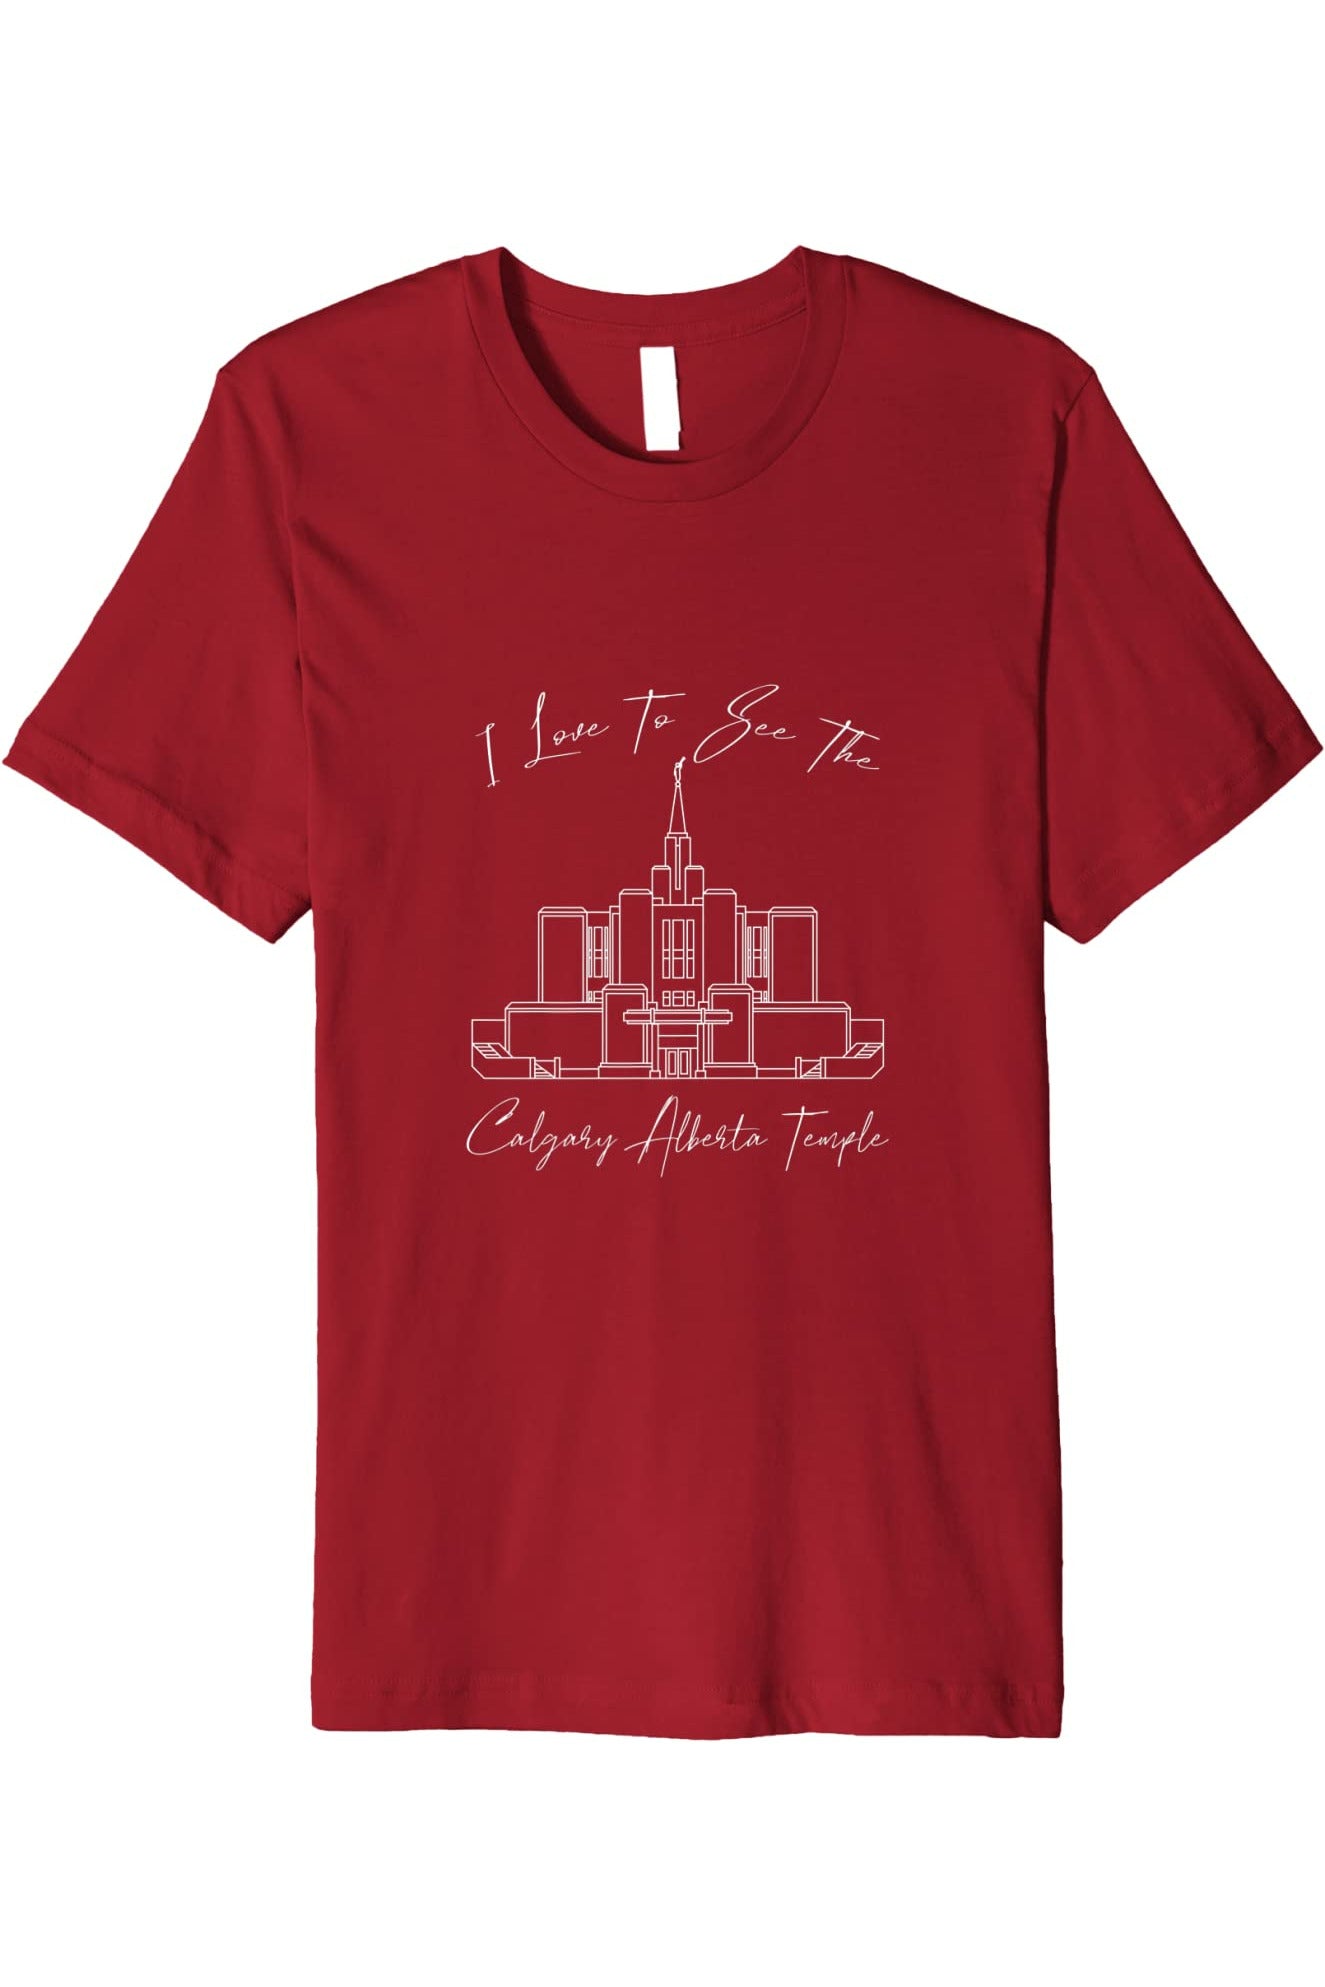 Calgary Alberta Temple T-Shirt - Premium - Calligraphy Style (English) US